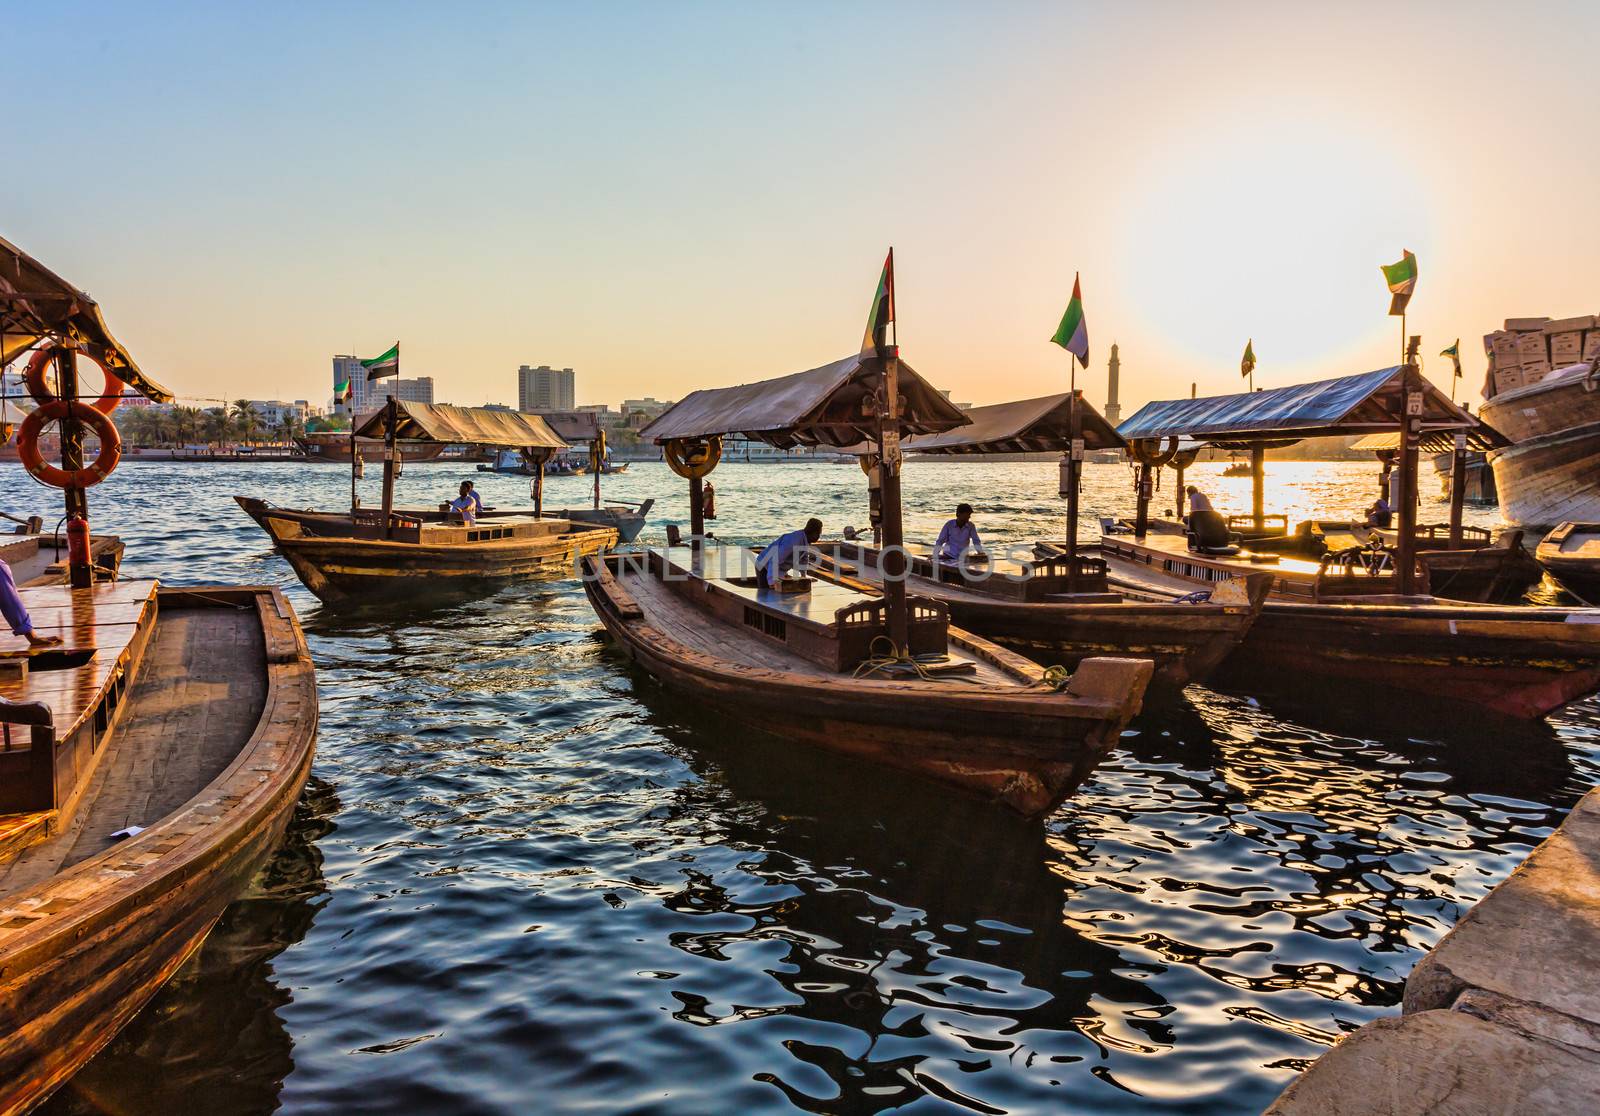  Boats on the Bay Creek in Dubai, UAE by oleg_zhukov